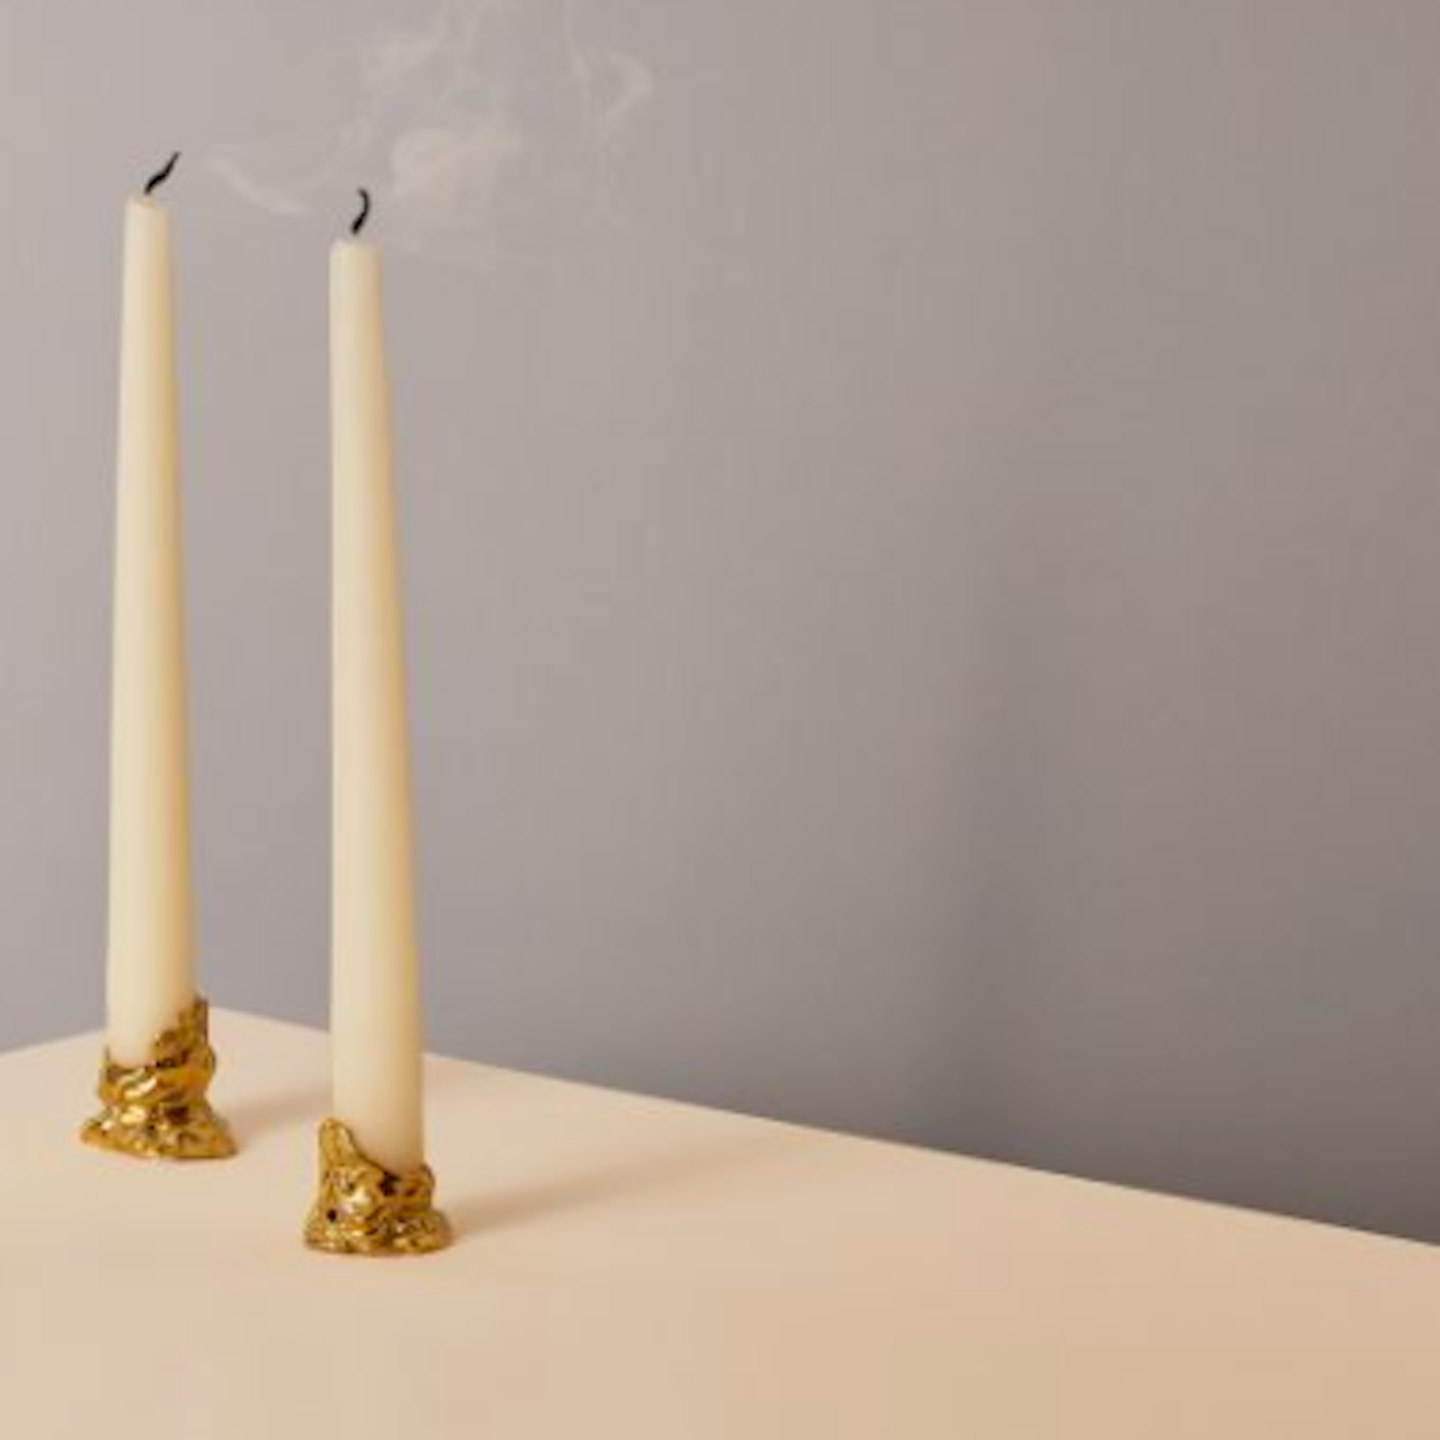 Deborah Blyth, Set of 2 Candleholders, £150